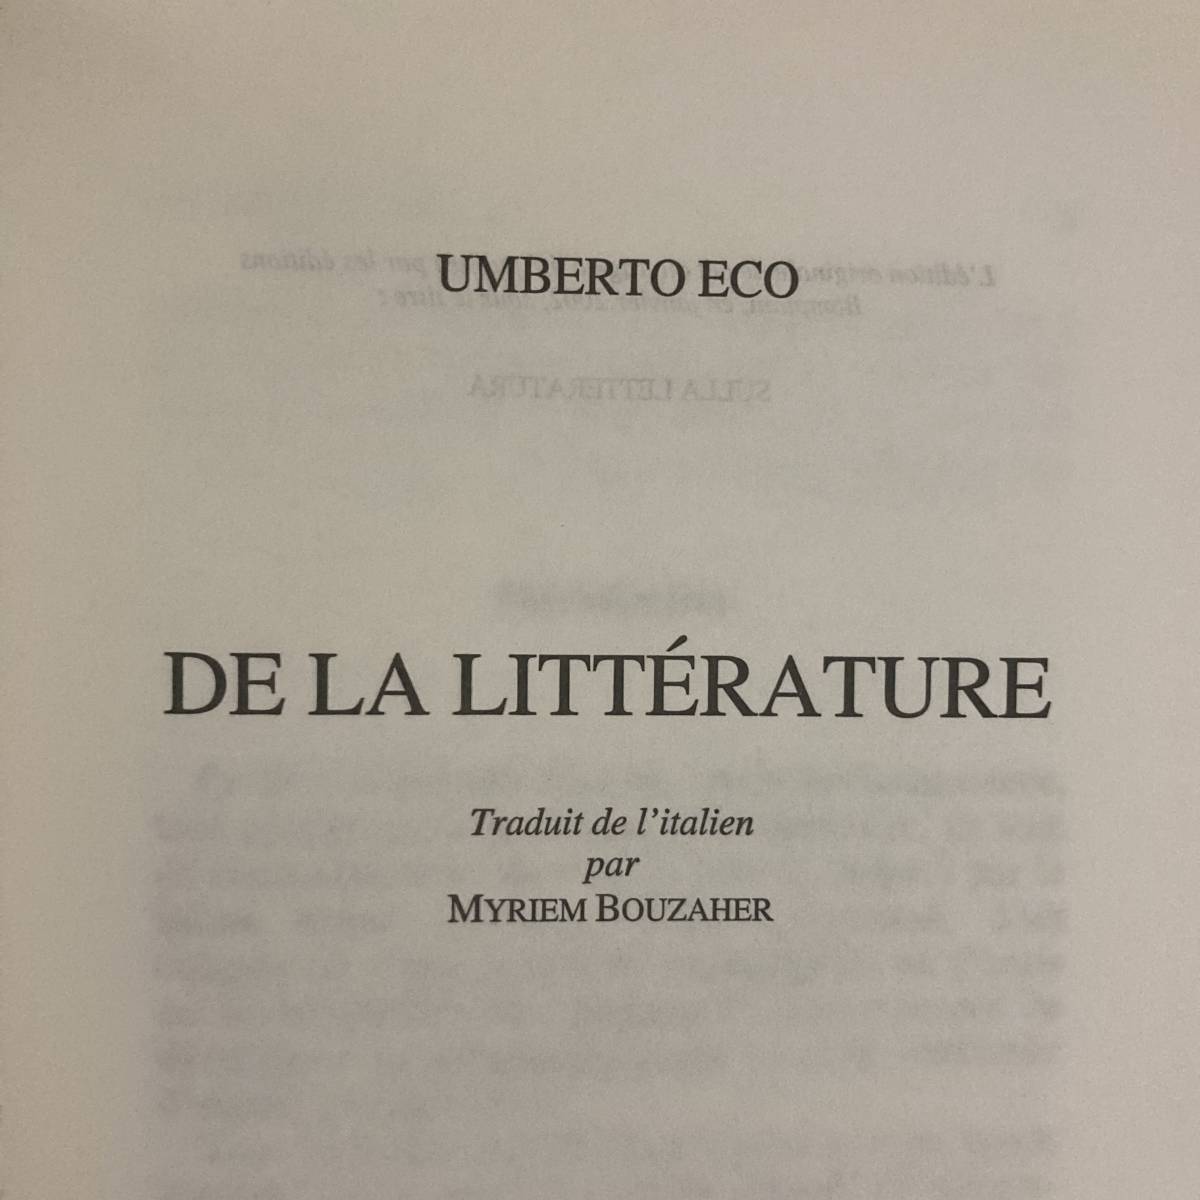 [. language foreign book ]De la litterature /un belt *e-koUmberto Eco( work )